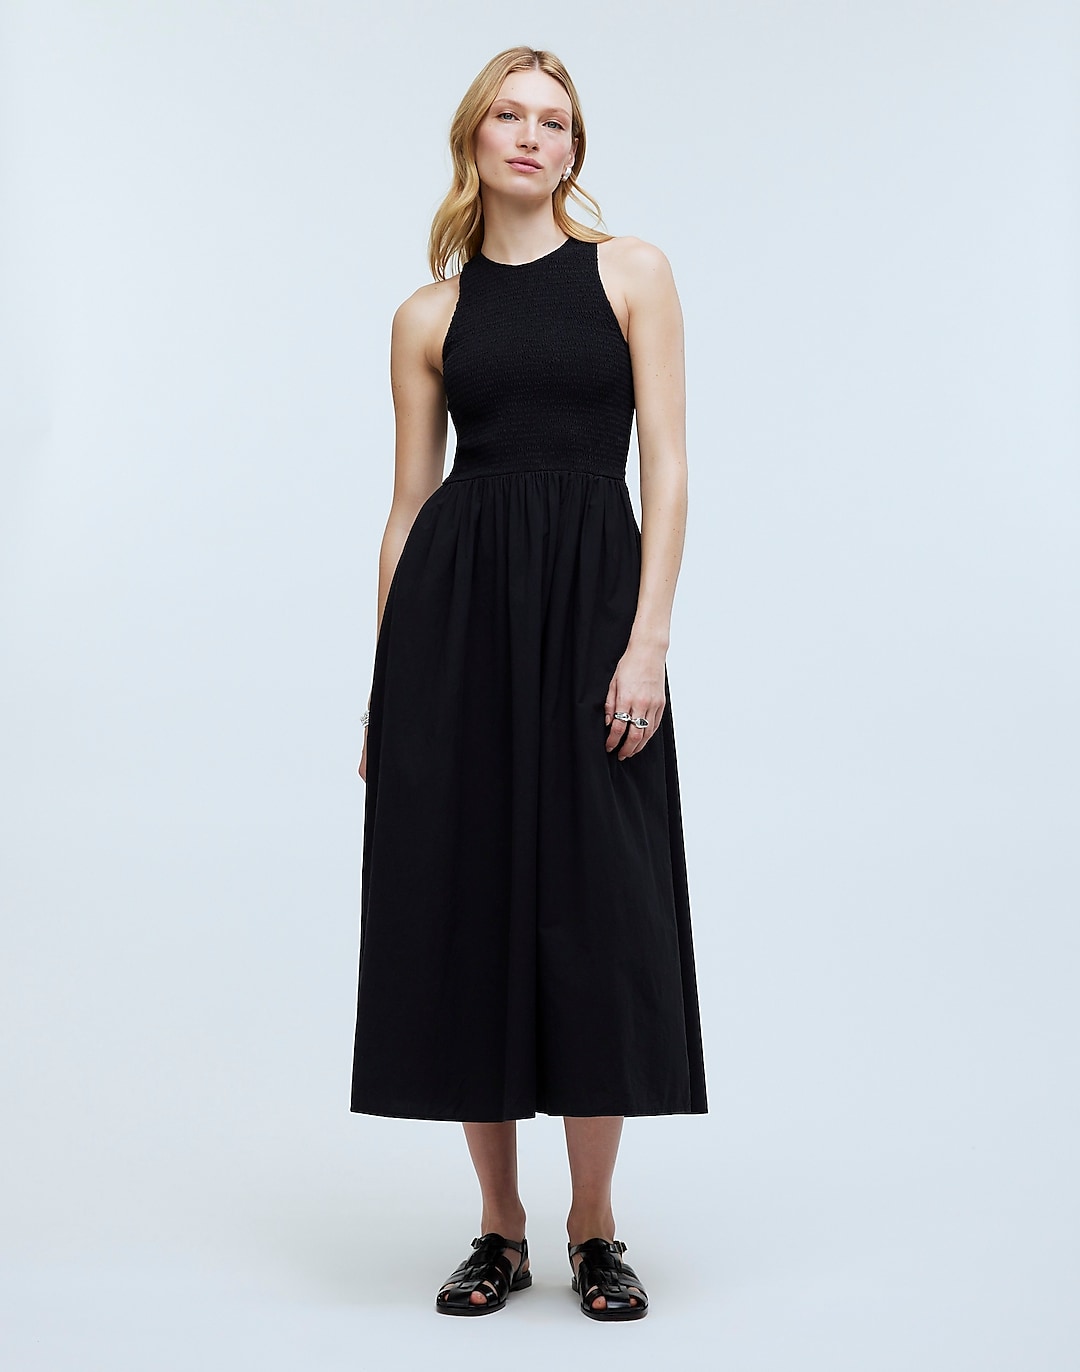 Women's Vintage Smocked Halter Neck Dress in Black